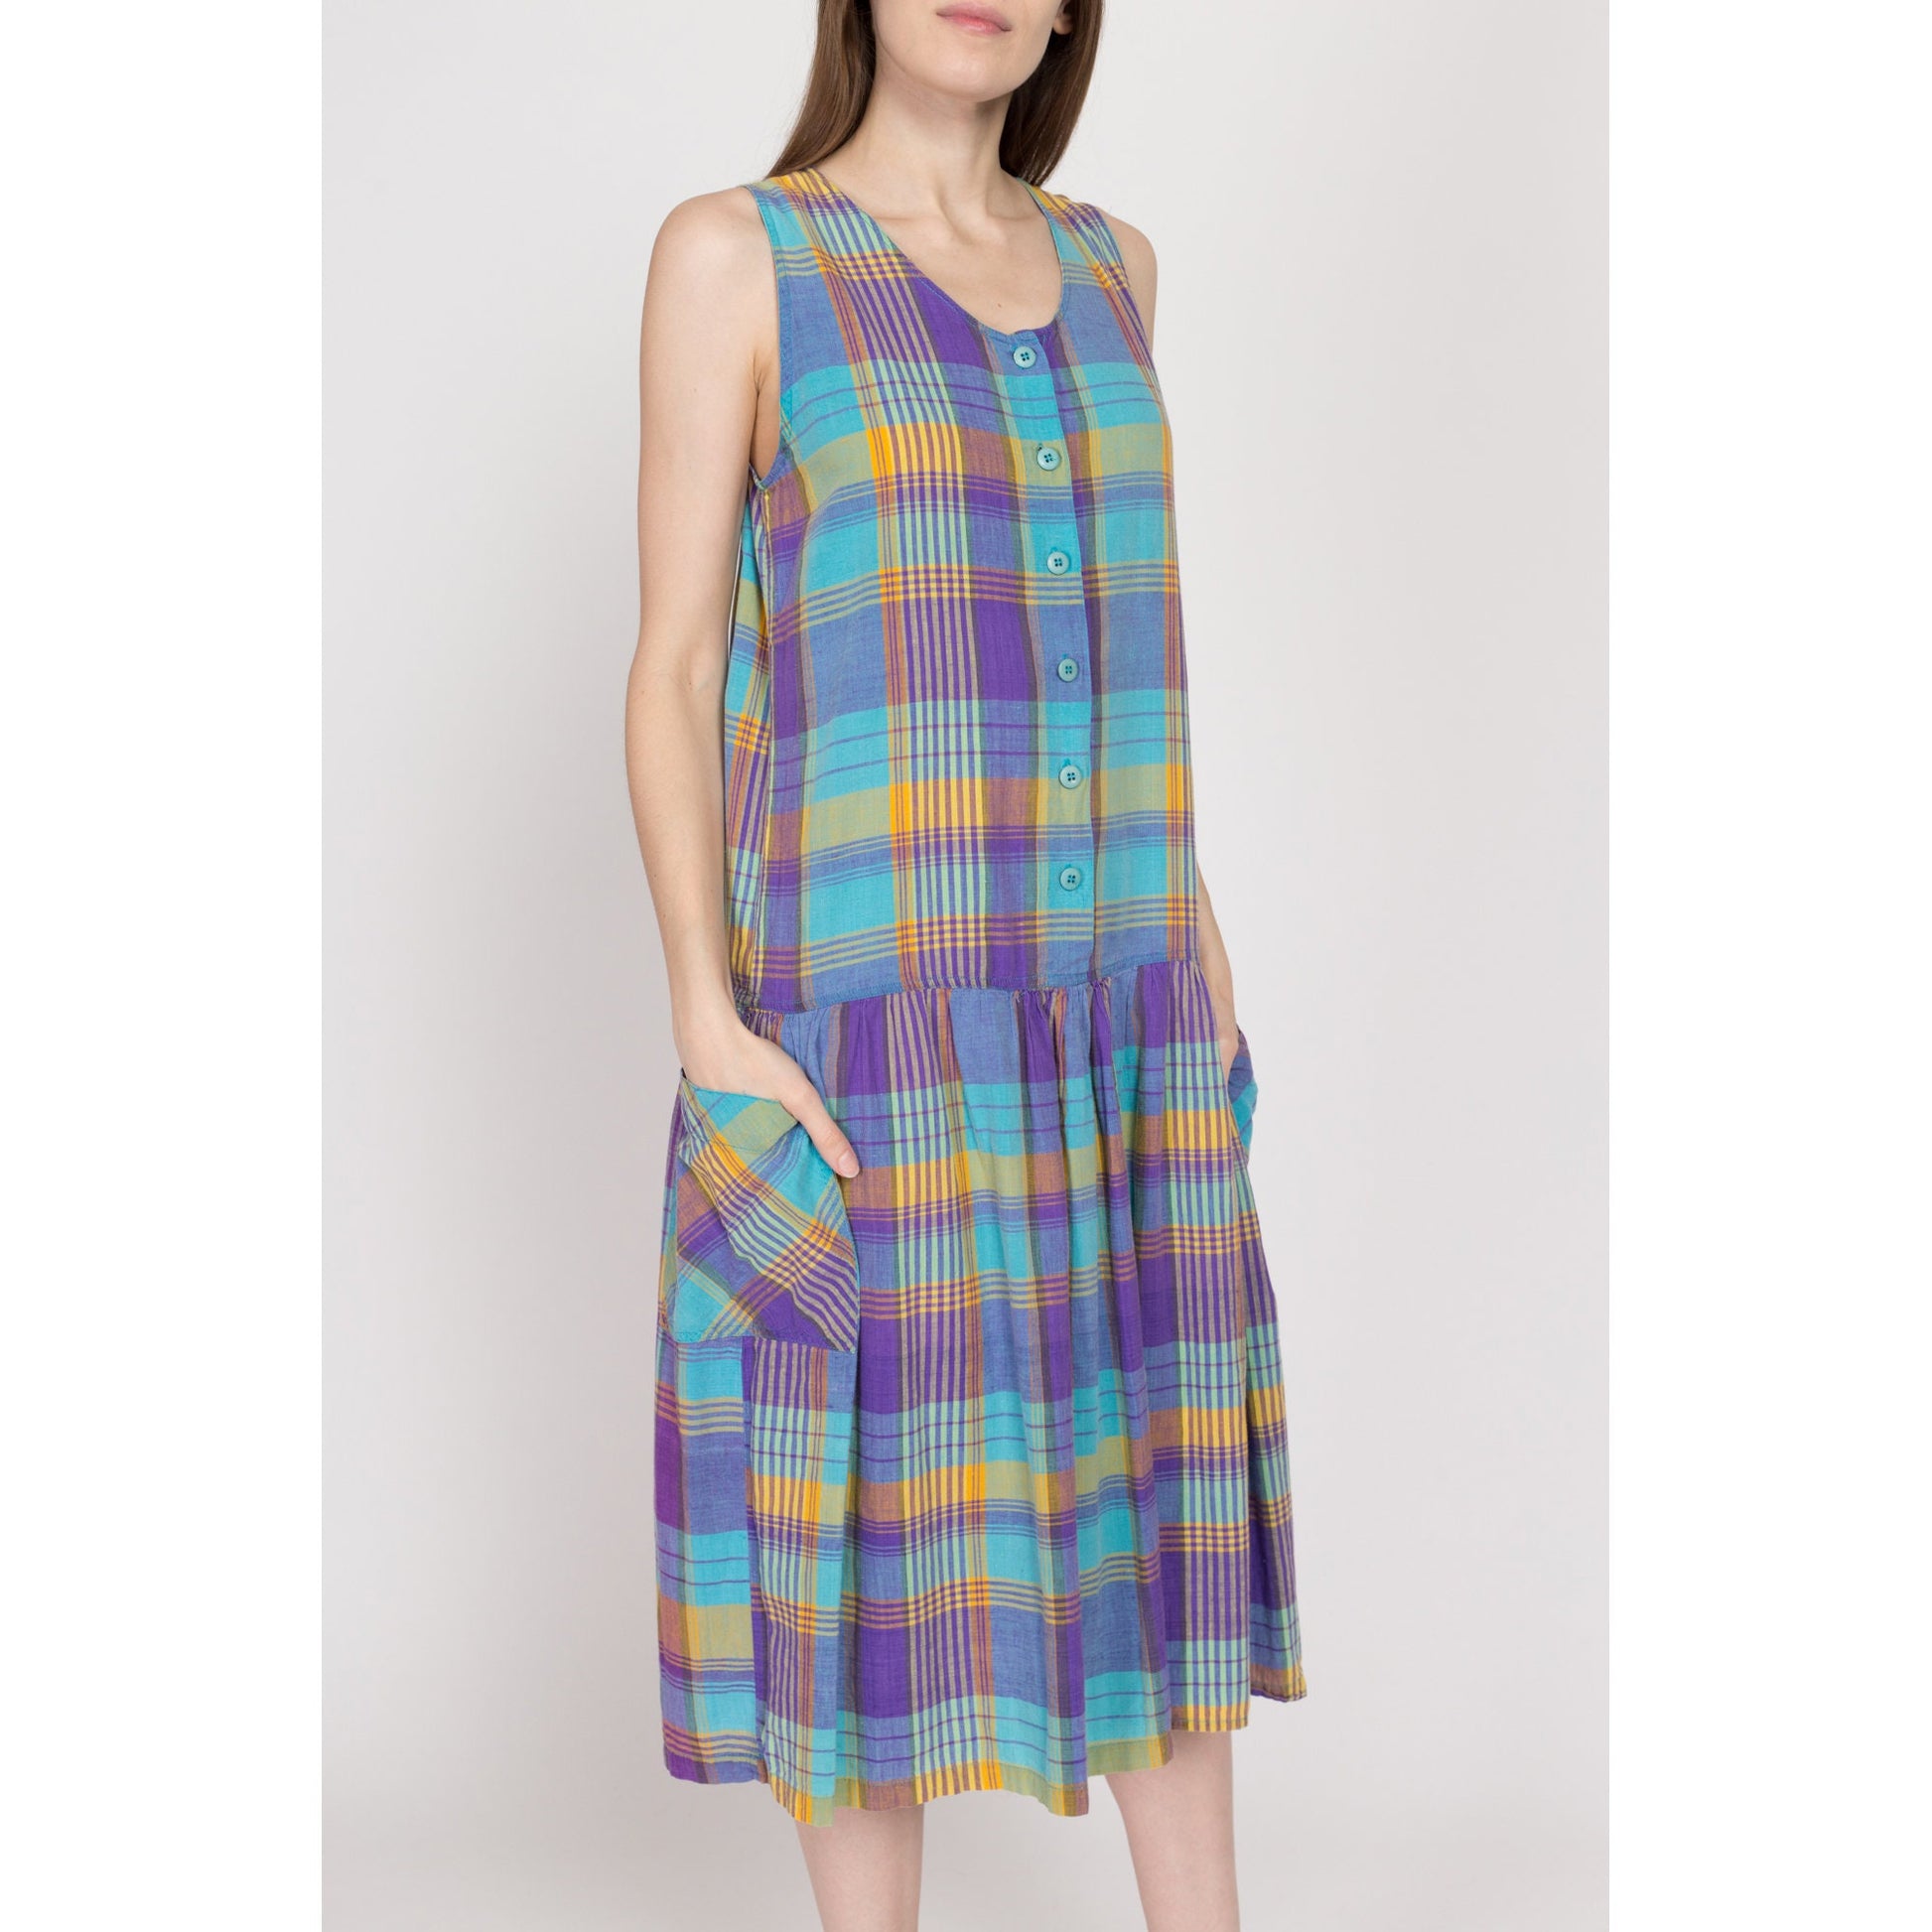 Medium 90s Grunge Madras Plaid Cotton Pinafore Dress | Vintage Blue Purple Oversize Midi Pocket Jumper Dress